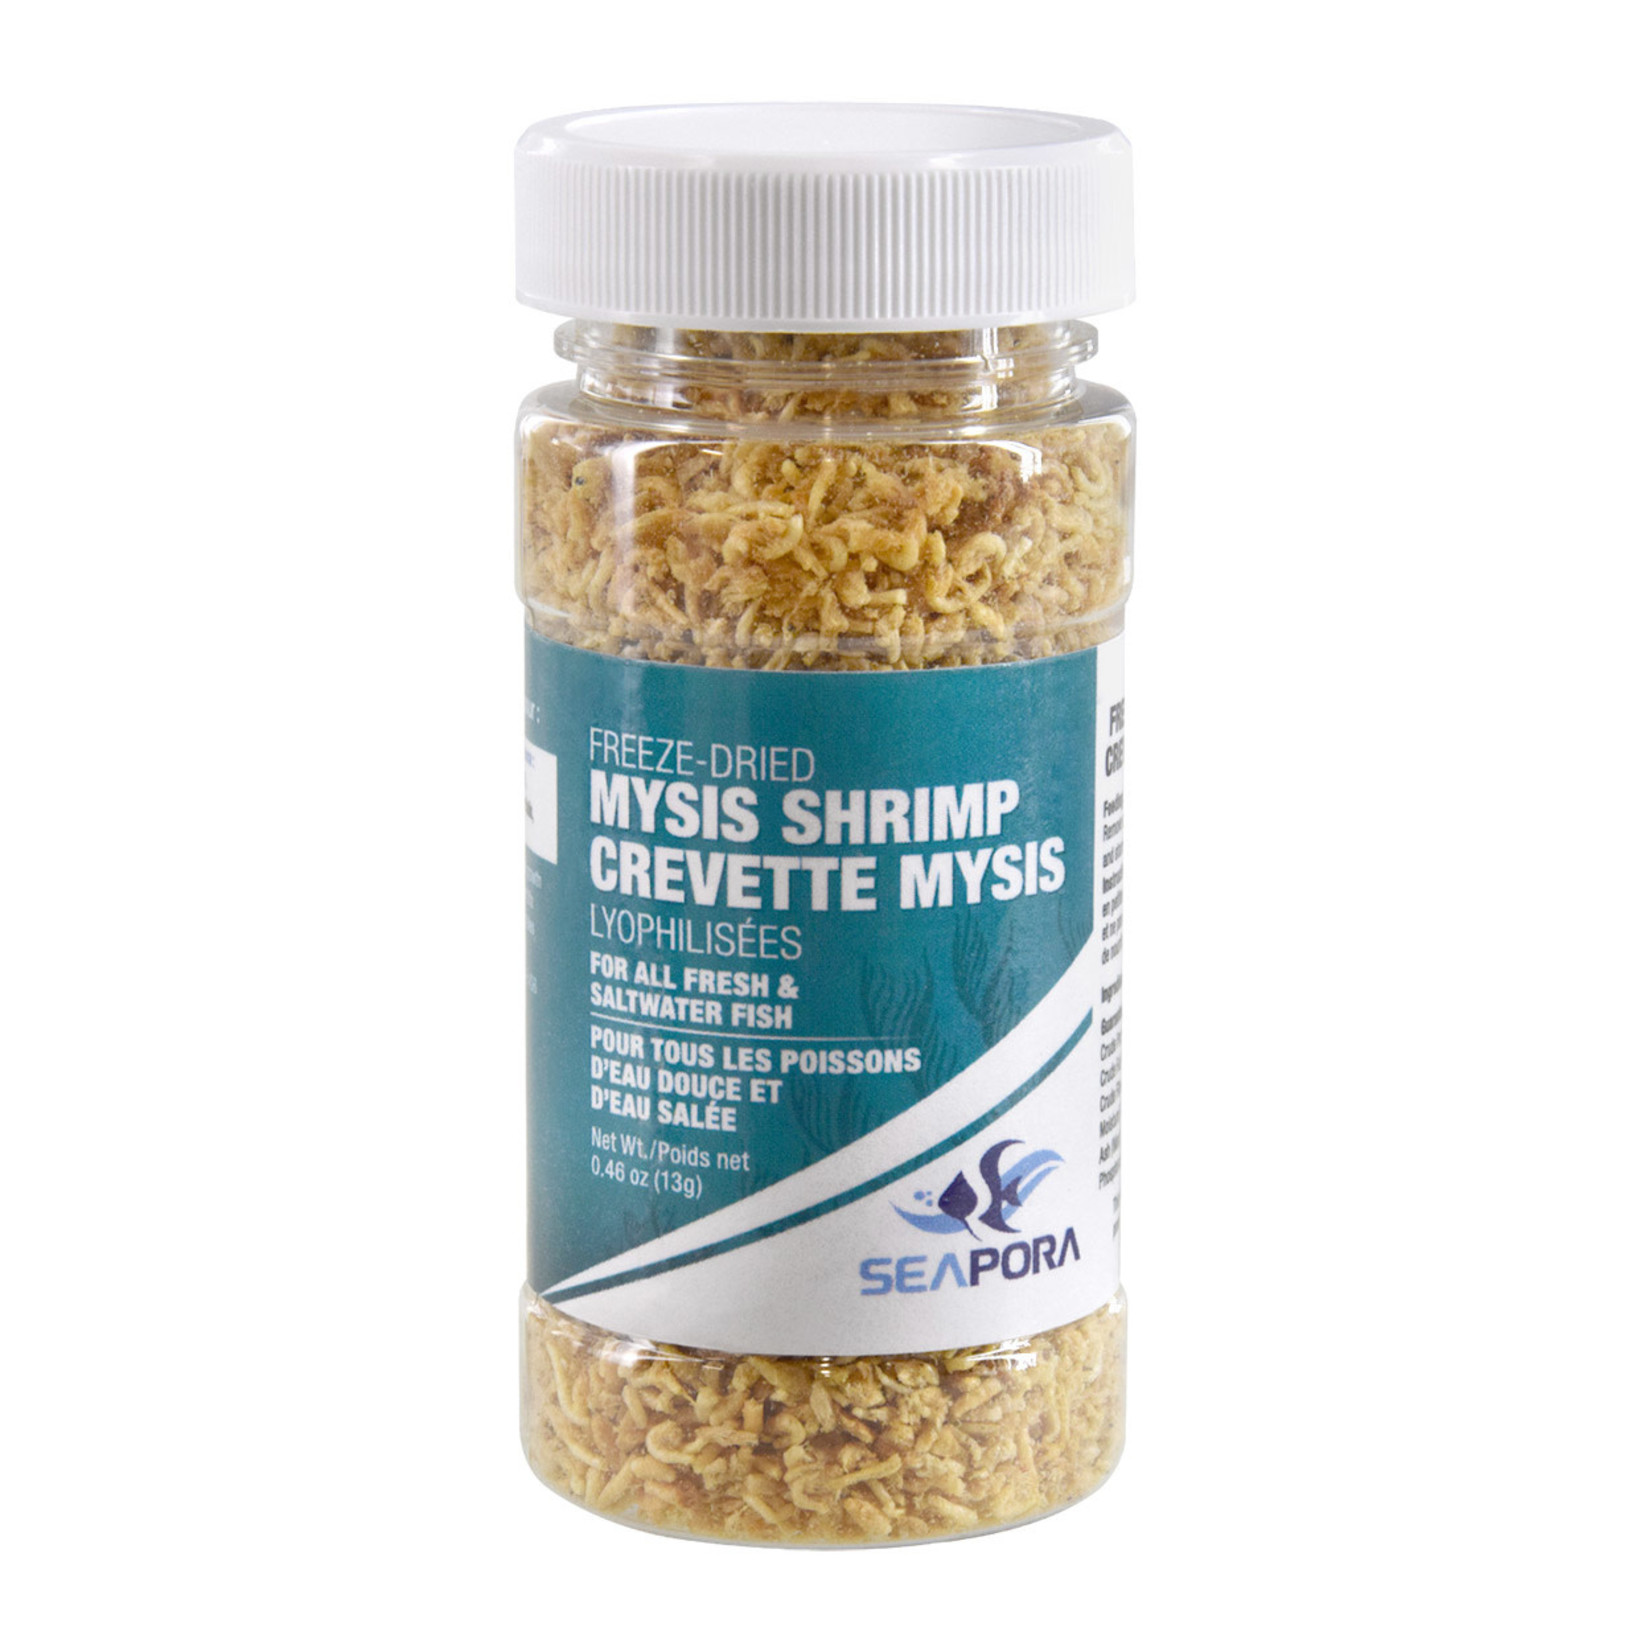 SEAPORA Seapora Freeze-Dried Mysis Shrimp - 13 g